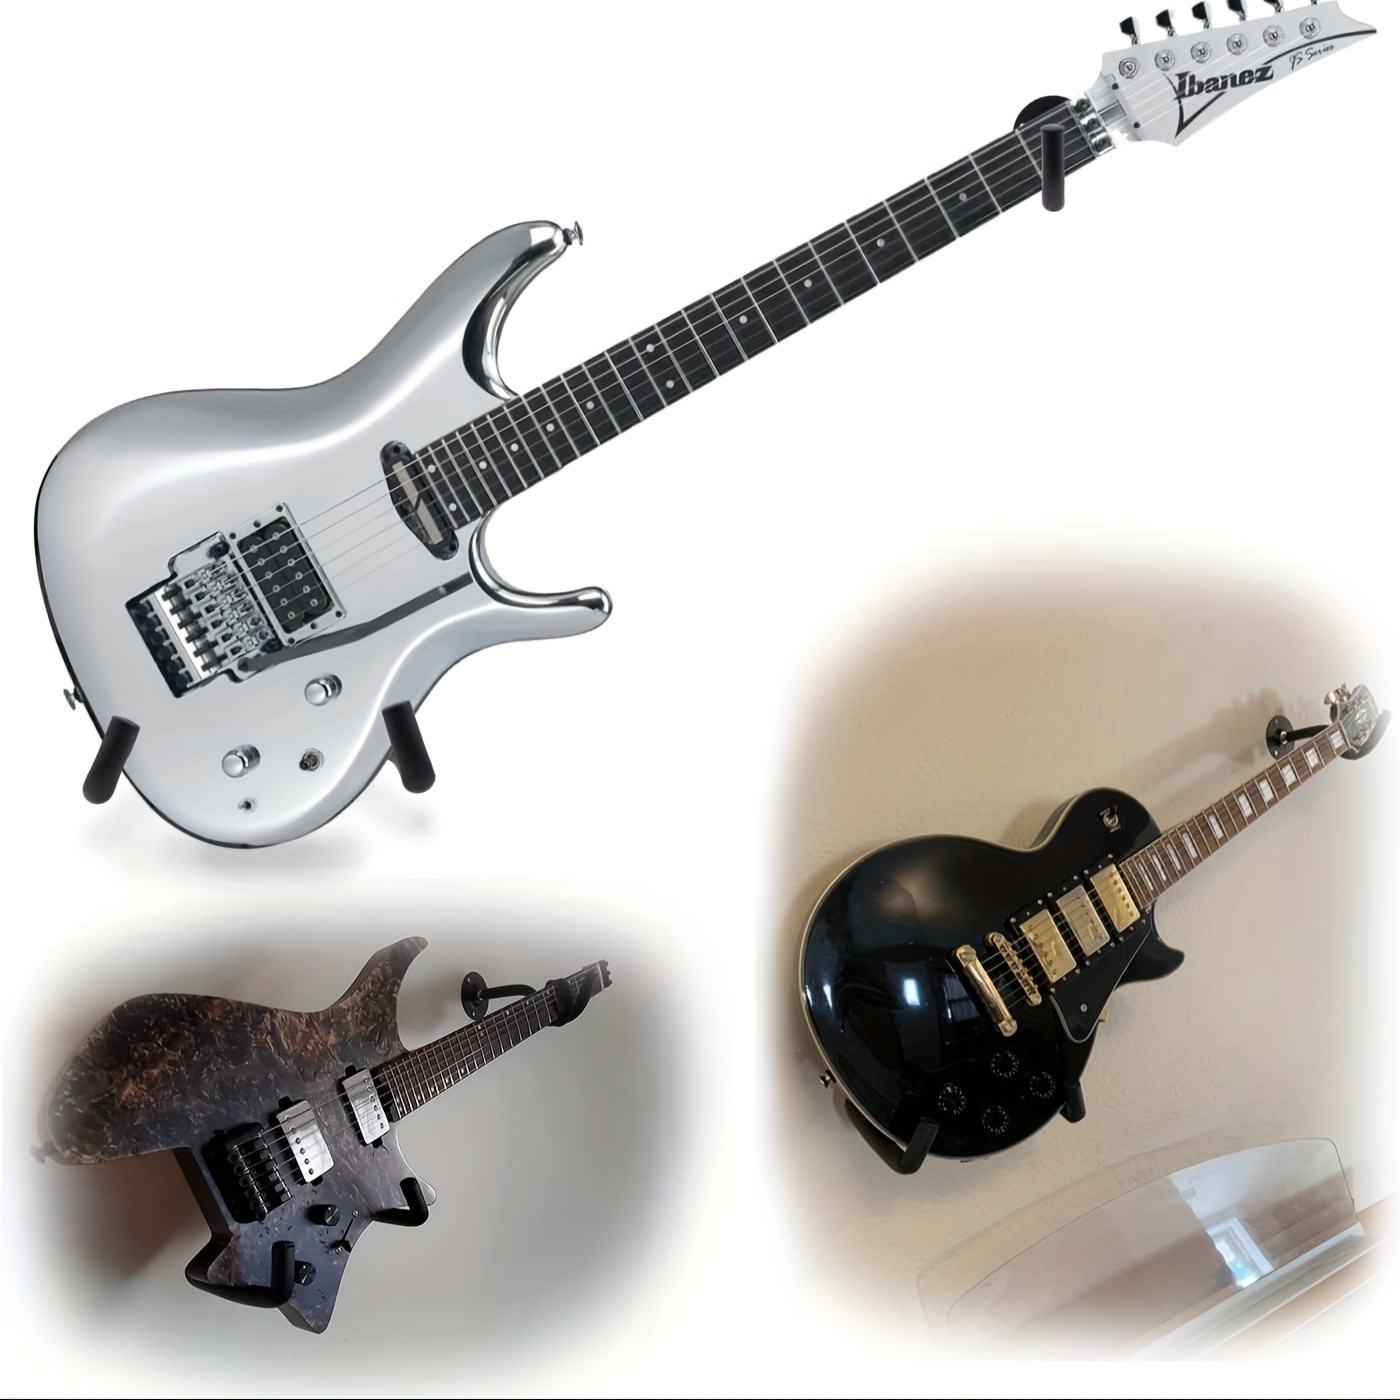 Iapetus - Soporte de pared para guitarra, soporte de pared para ukelele,  accesorios de pared para el hogar o el estudio, soporte para guitarras